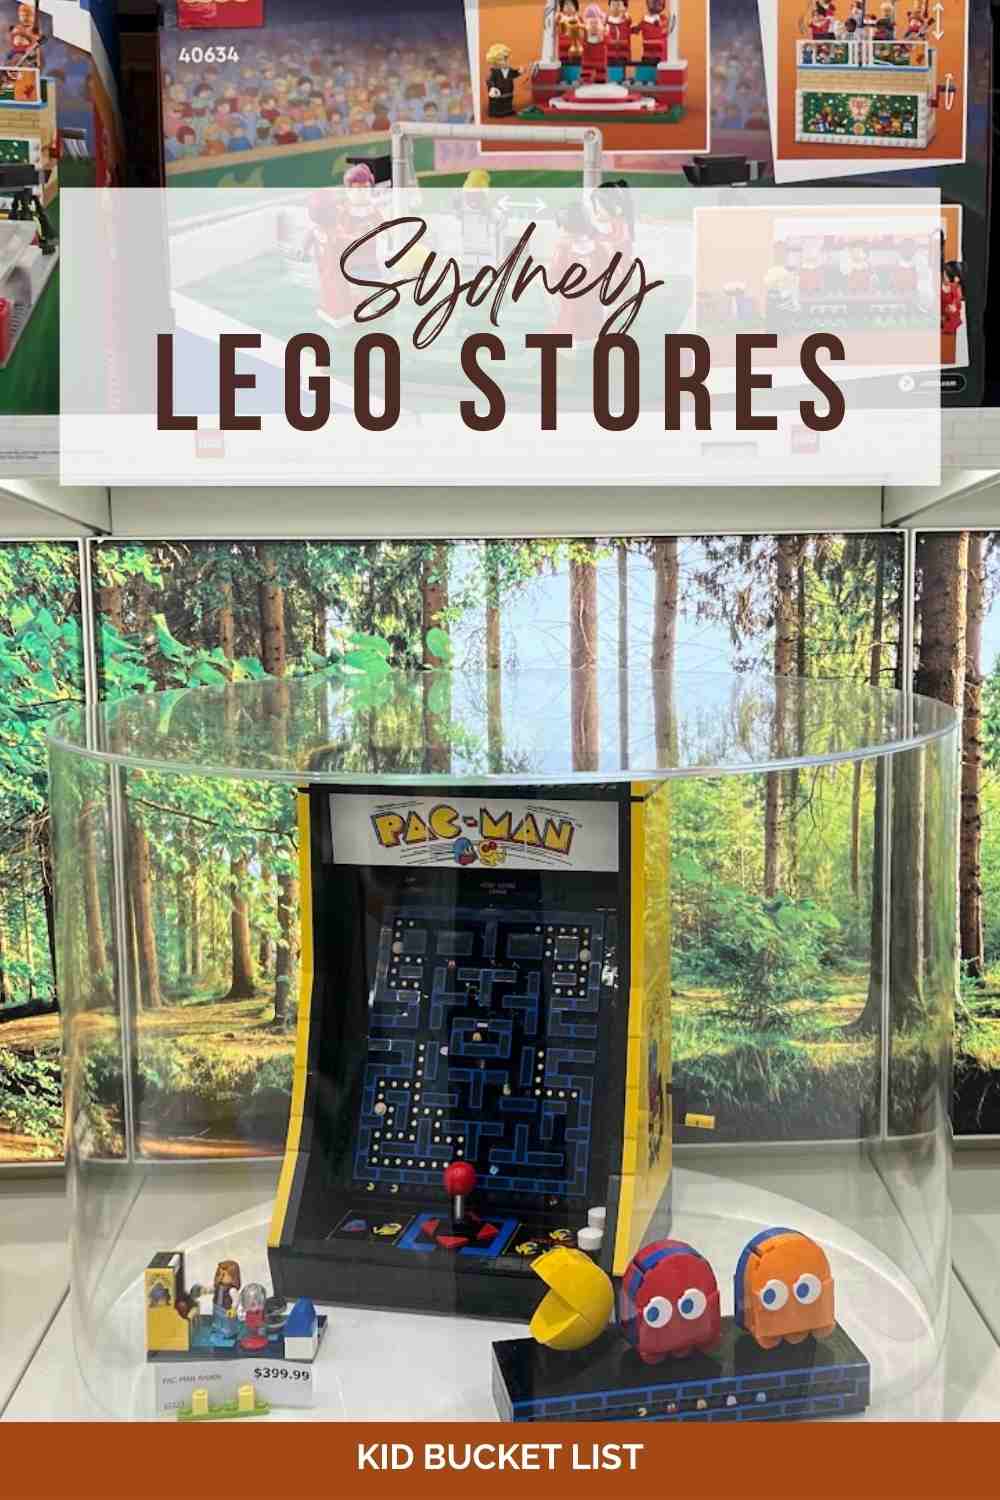 LEGO stores in Sydney NSW